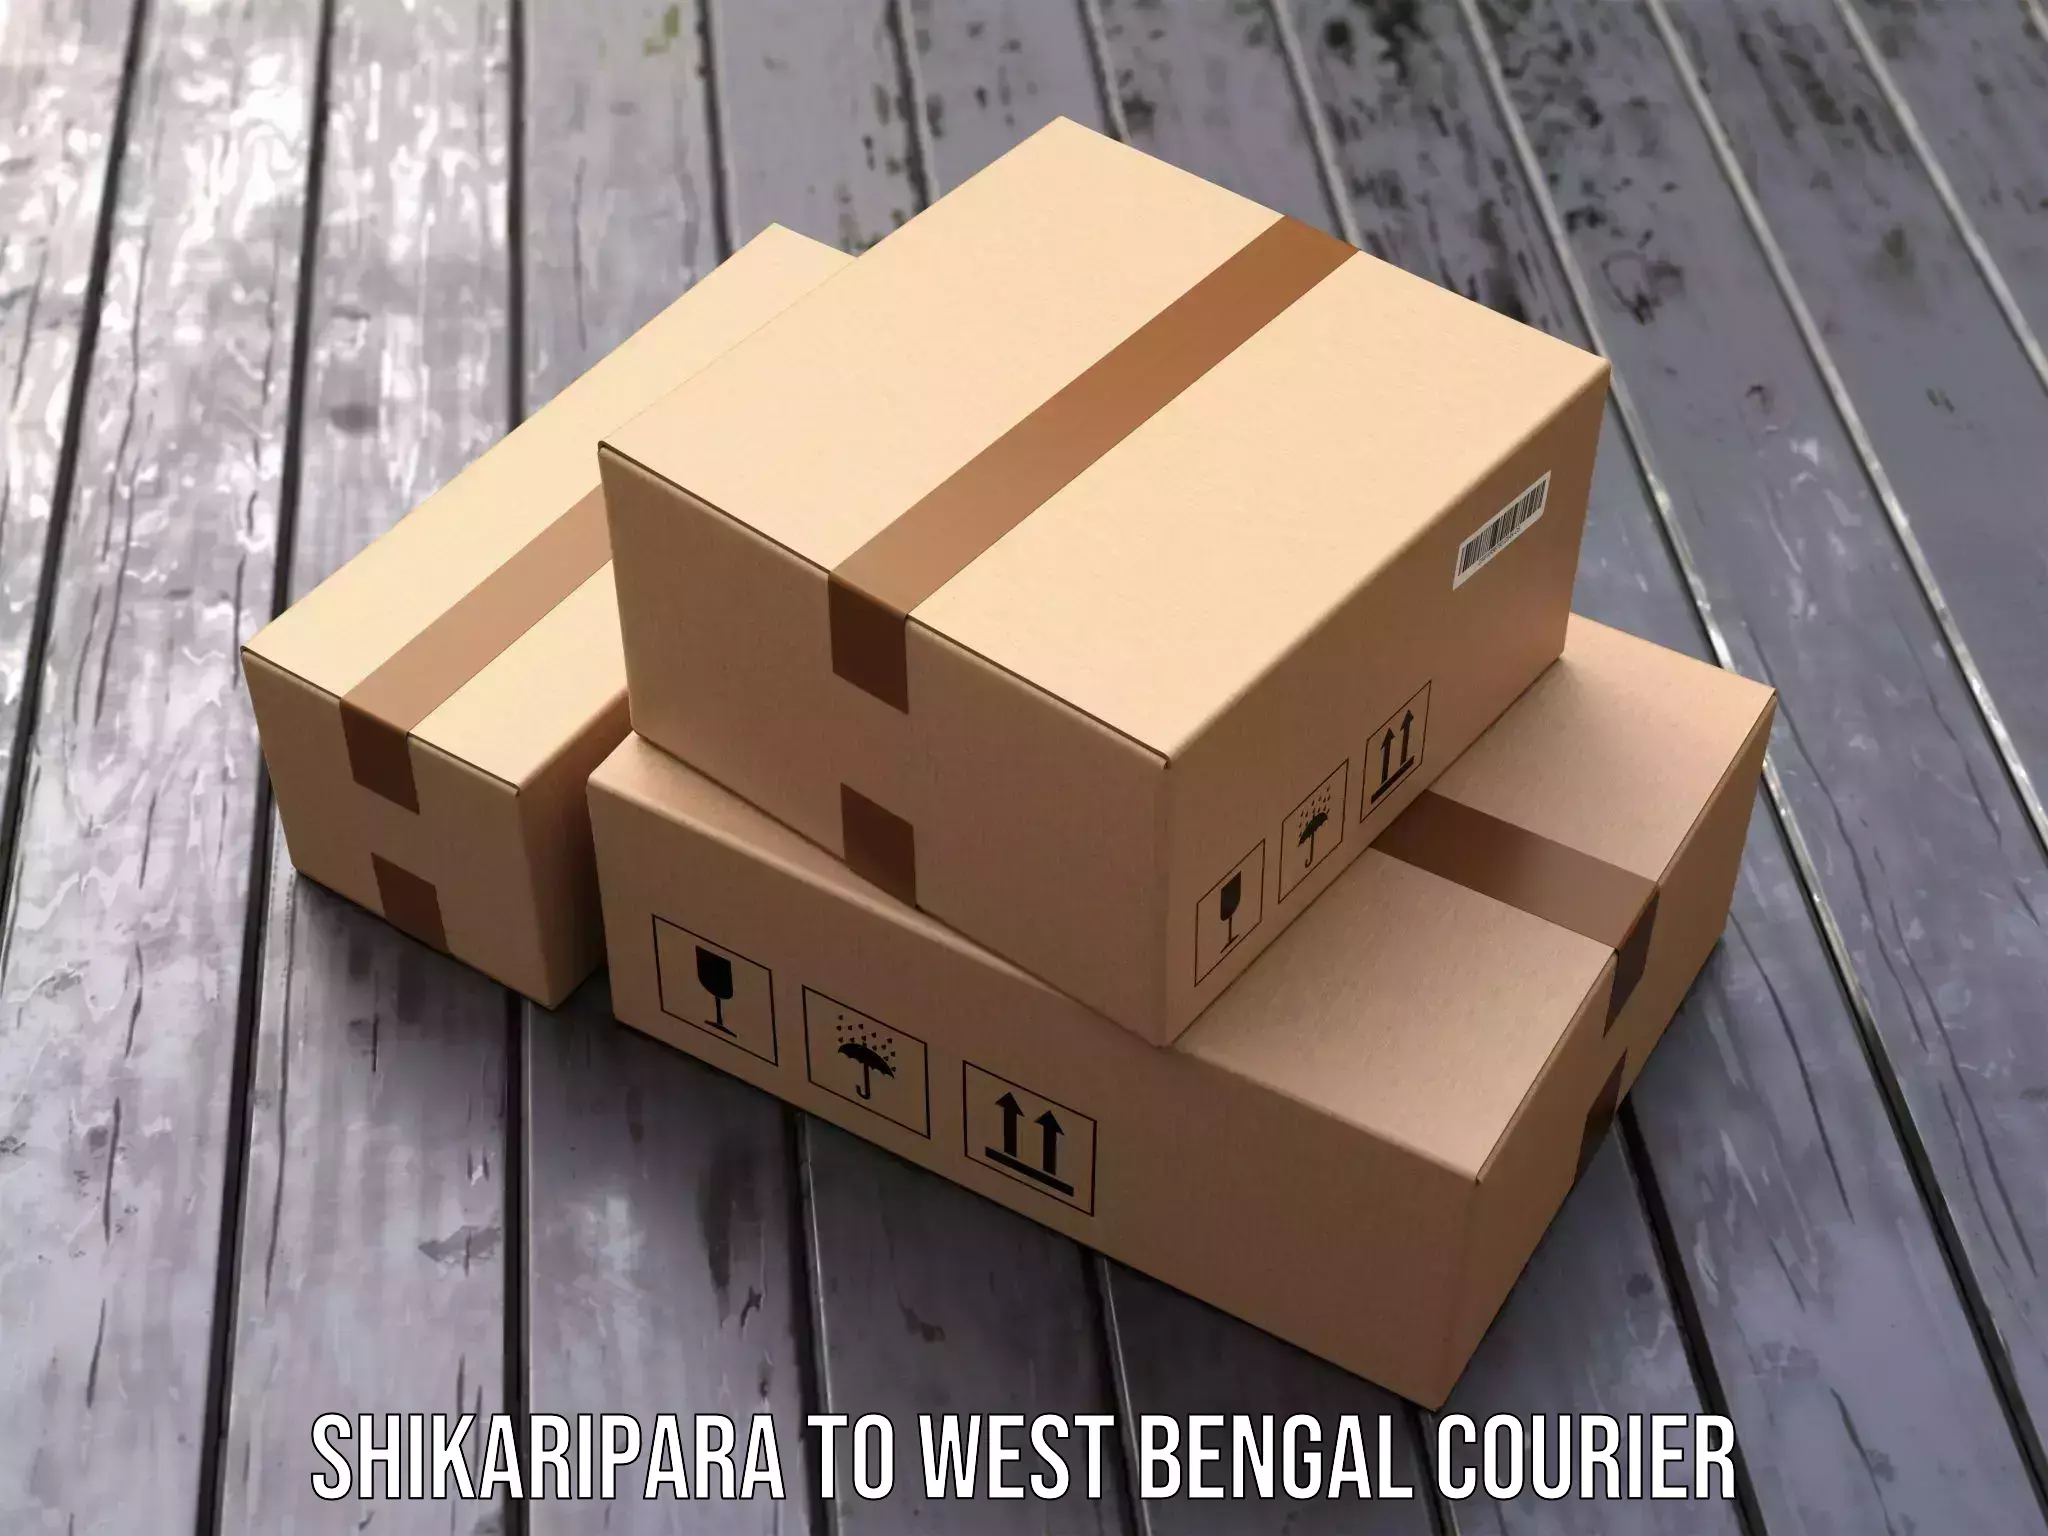 High-capacity parcel service Shikaripara to West Bengal